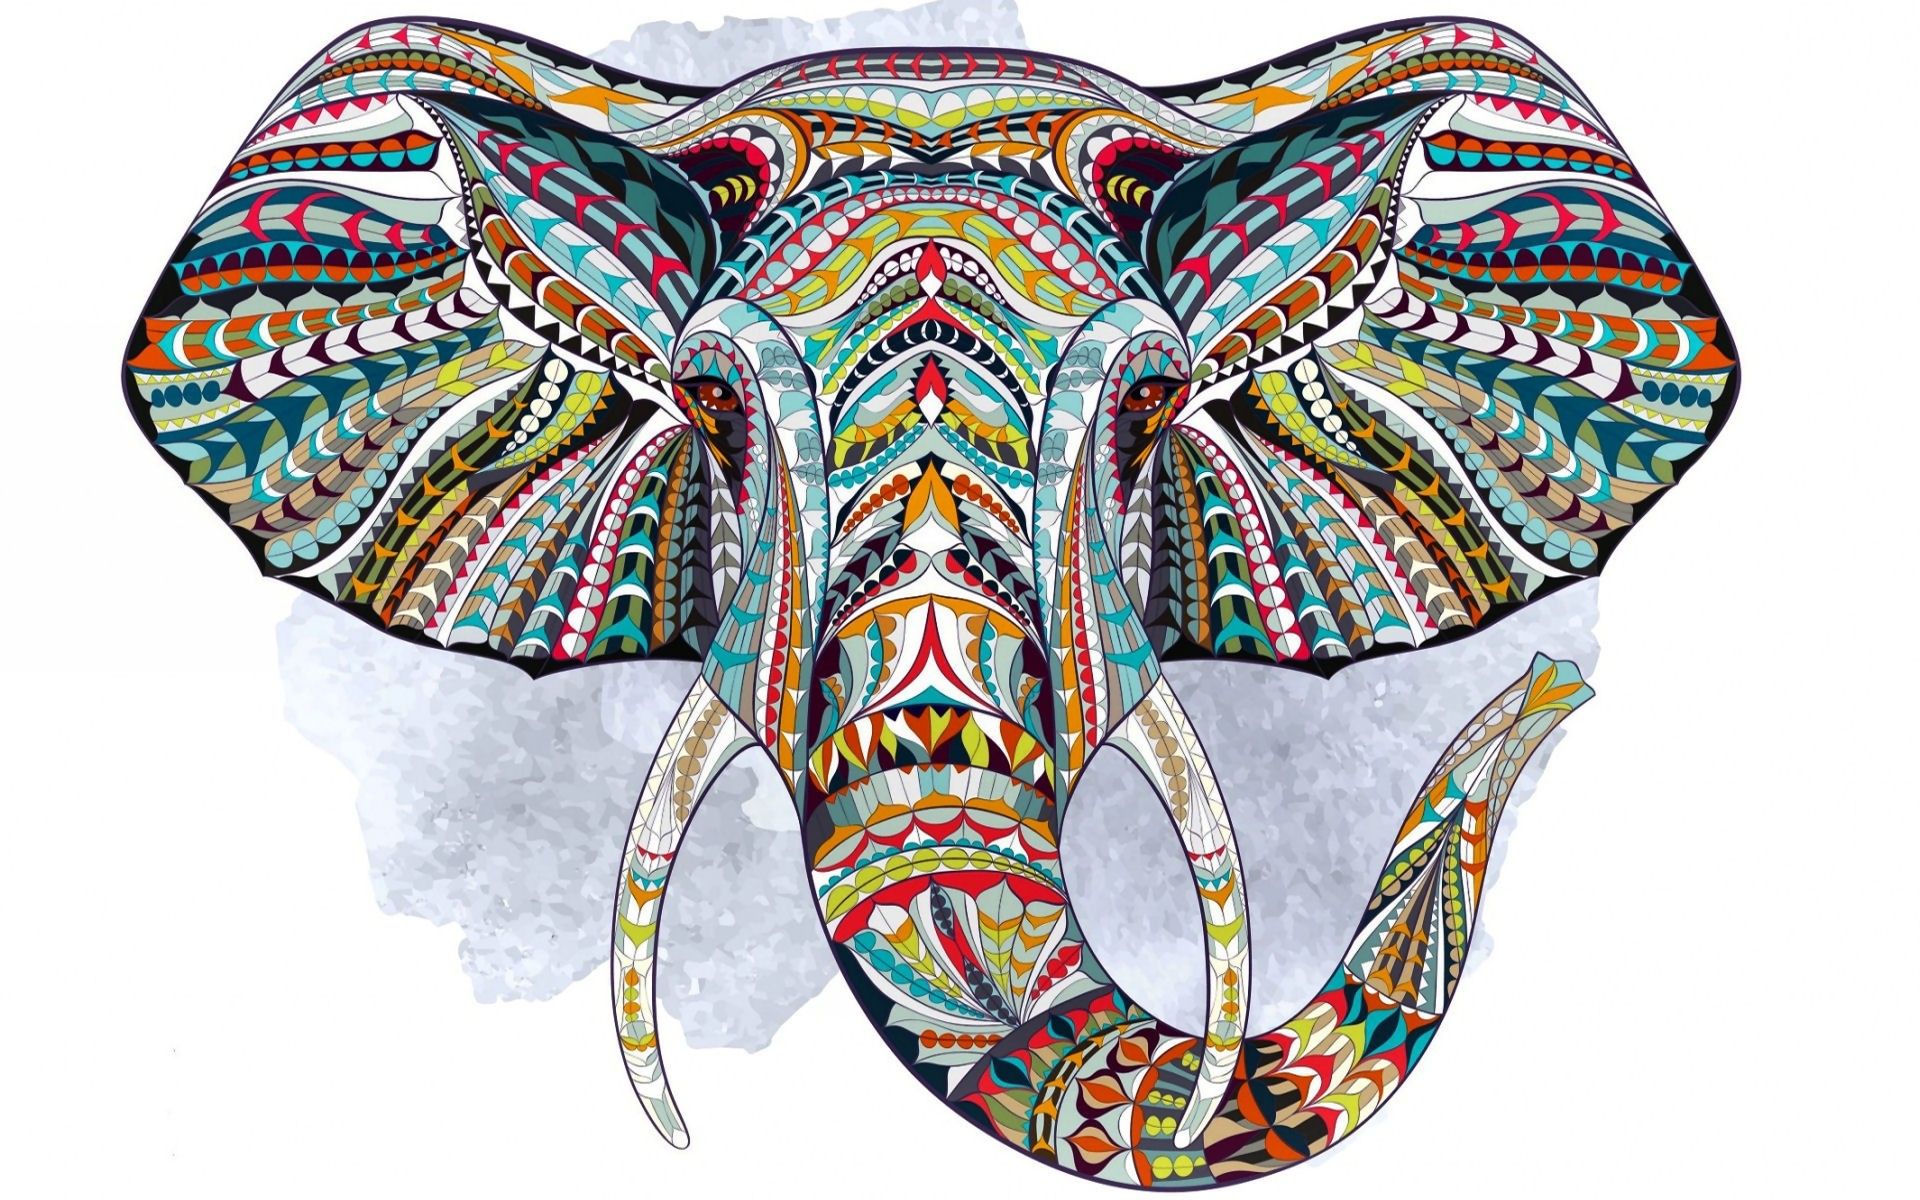 Good Luck Elephant Wallpapers